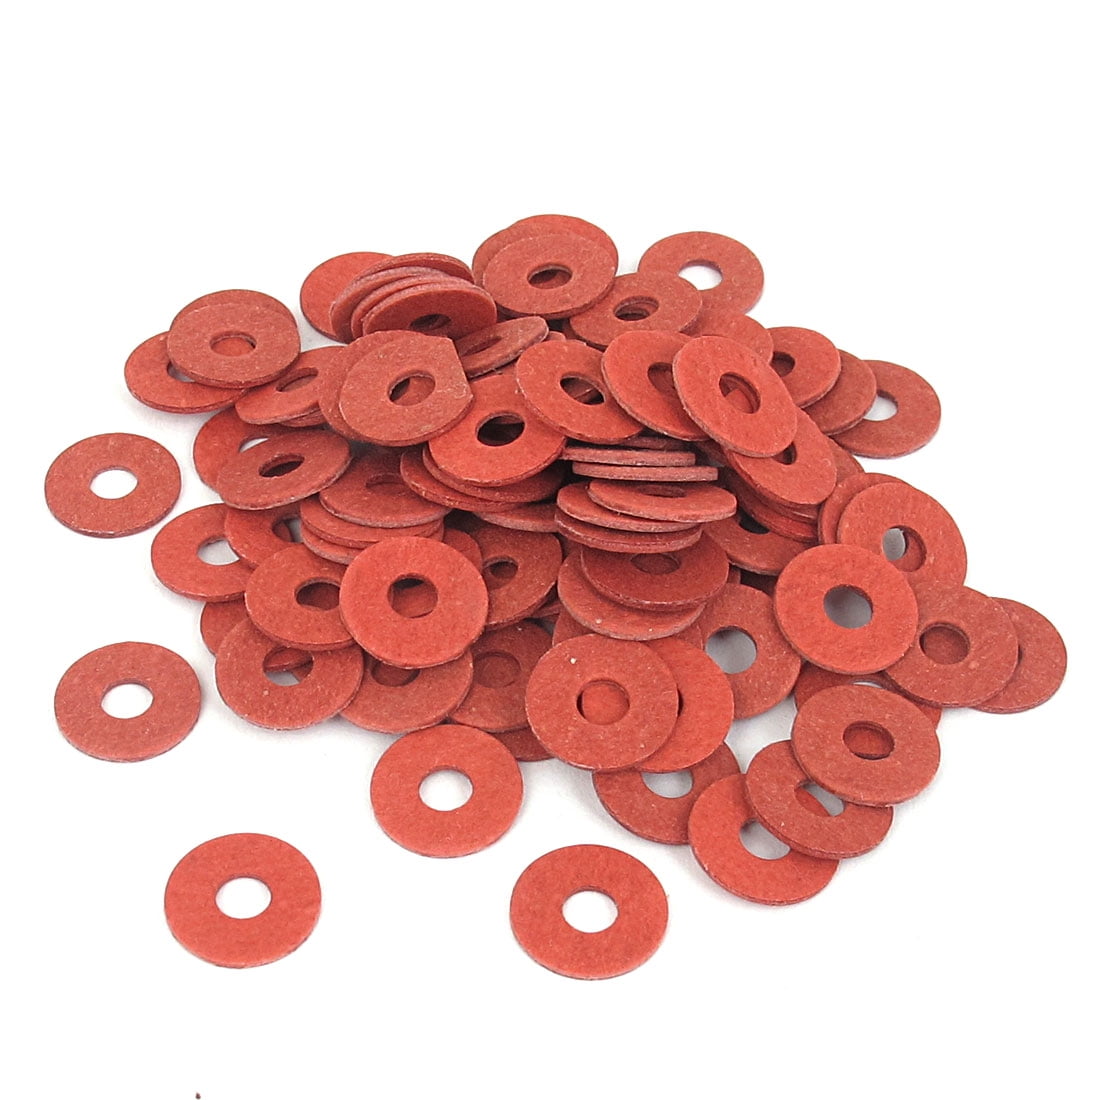 3mm x 10mm x 0.8mm 50pcs Red Insulating Fiber Washers 